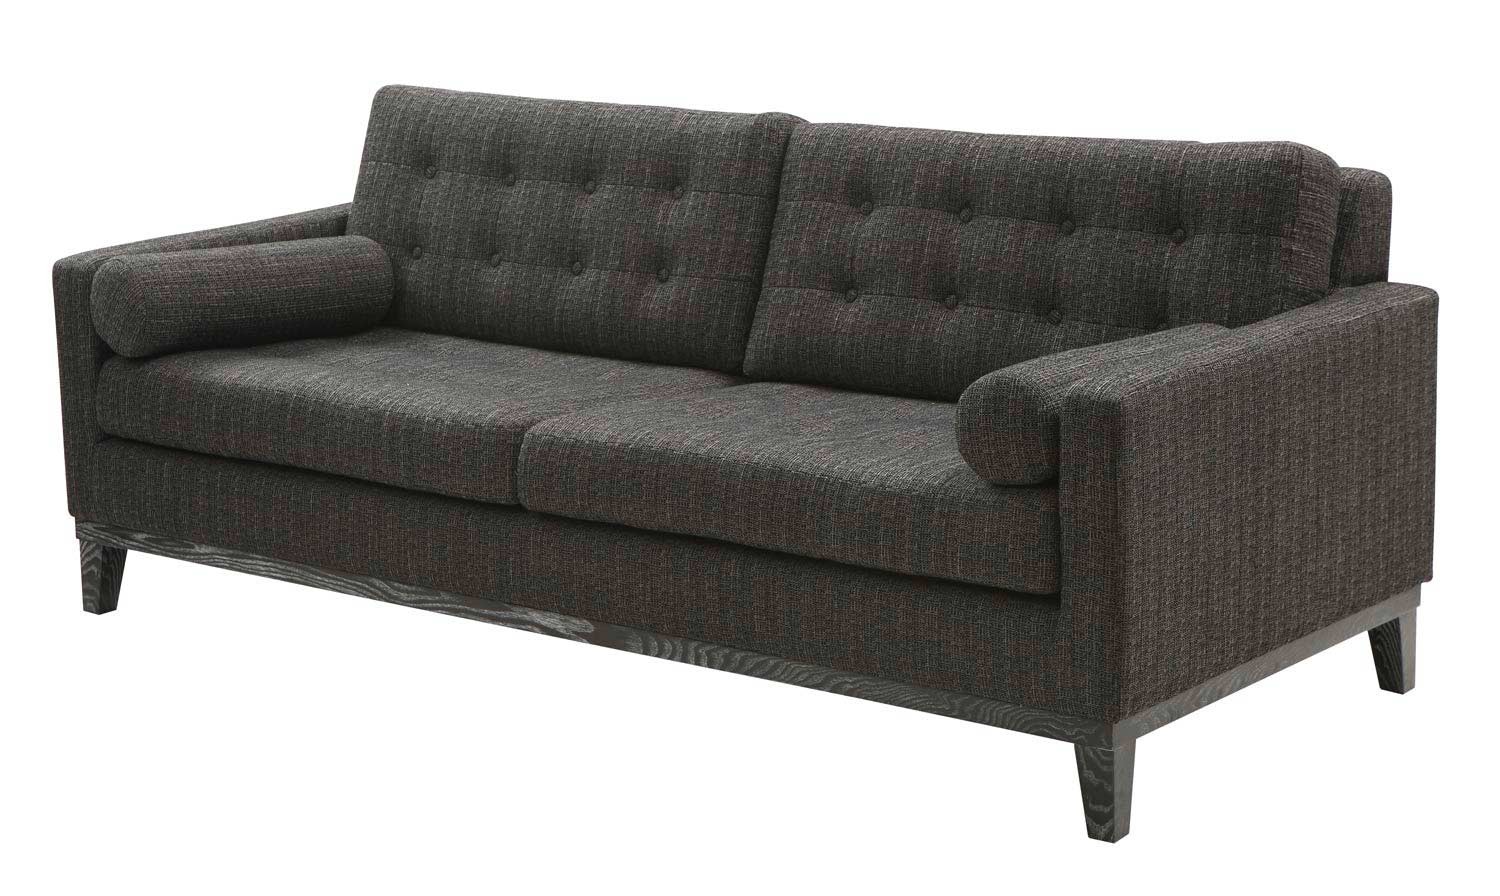 Armen Living Centennial Sofa Set - Charcoal